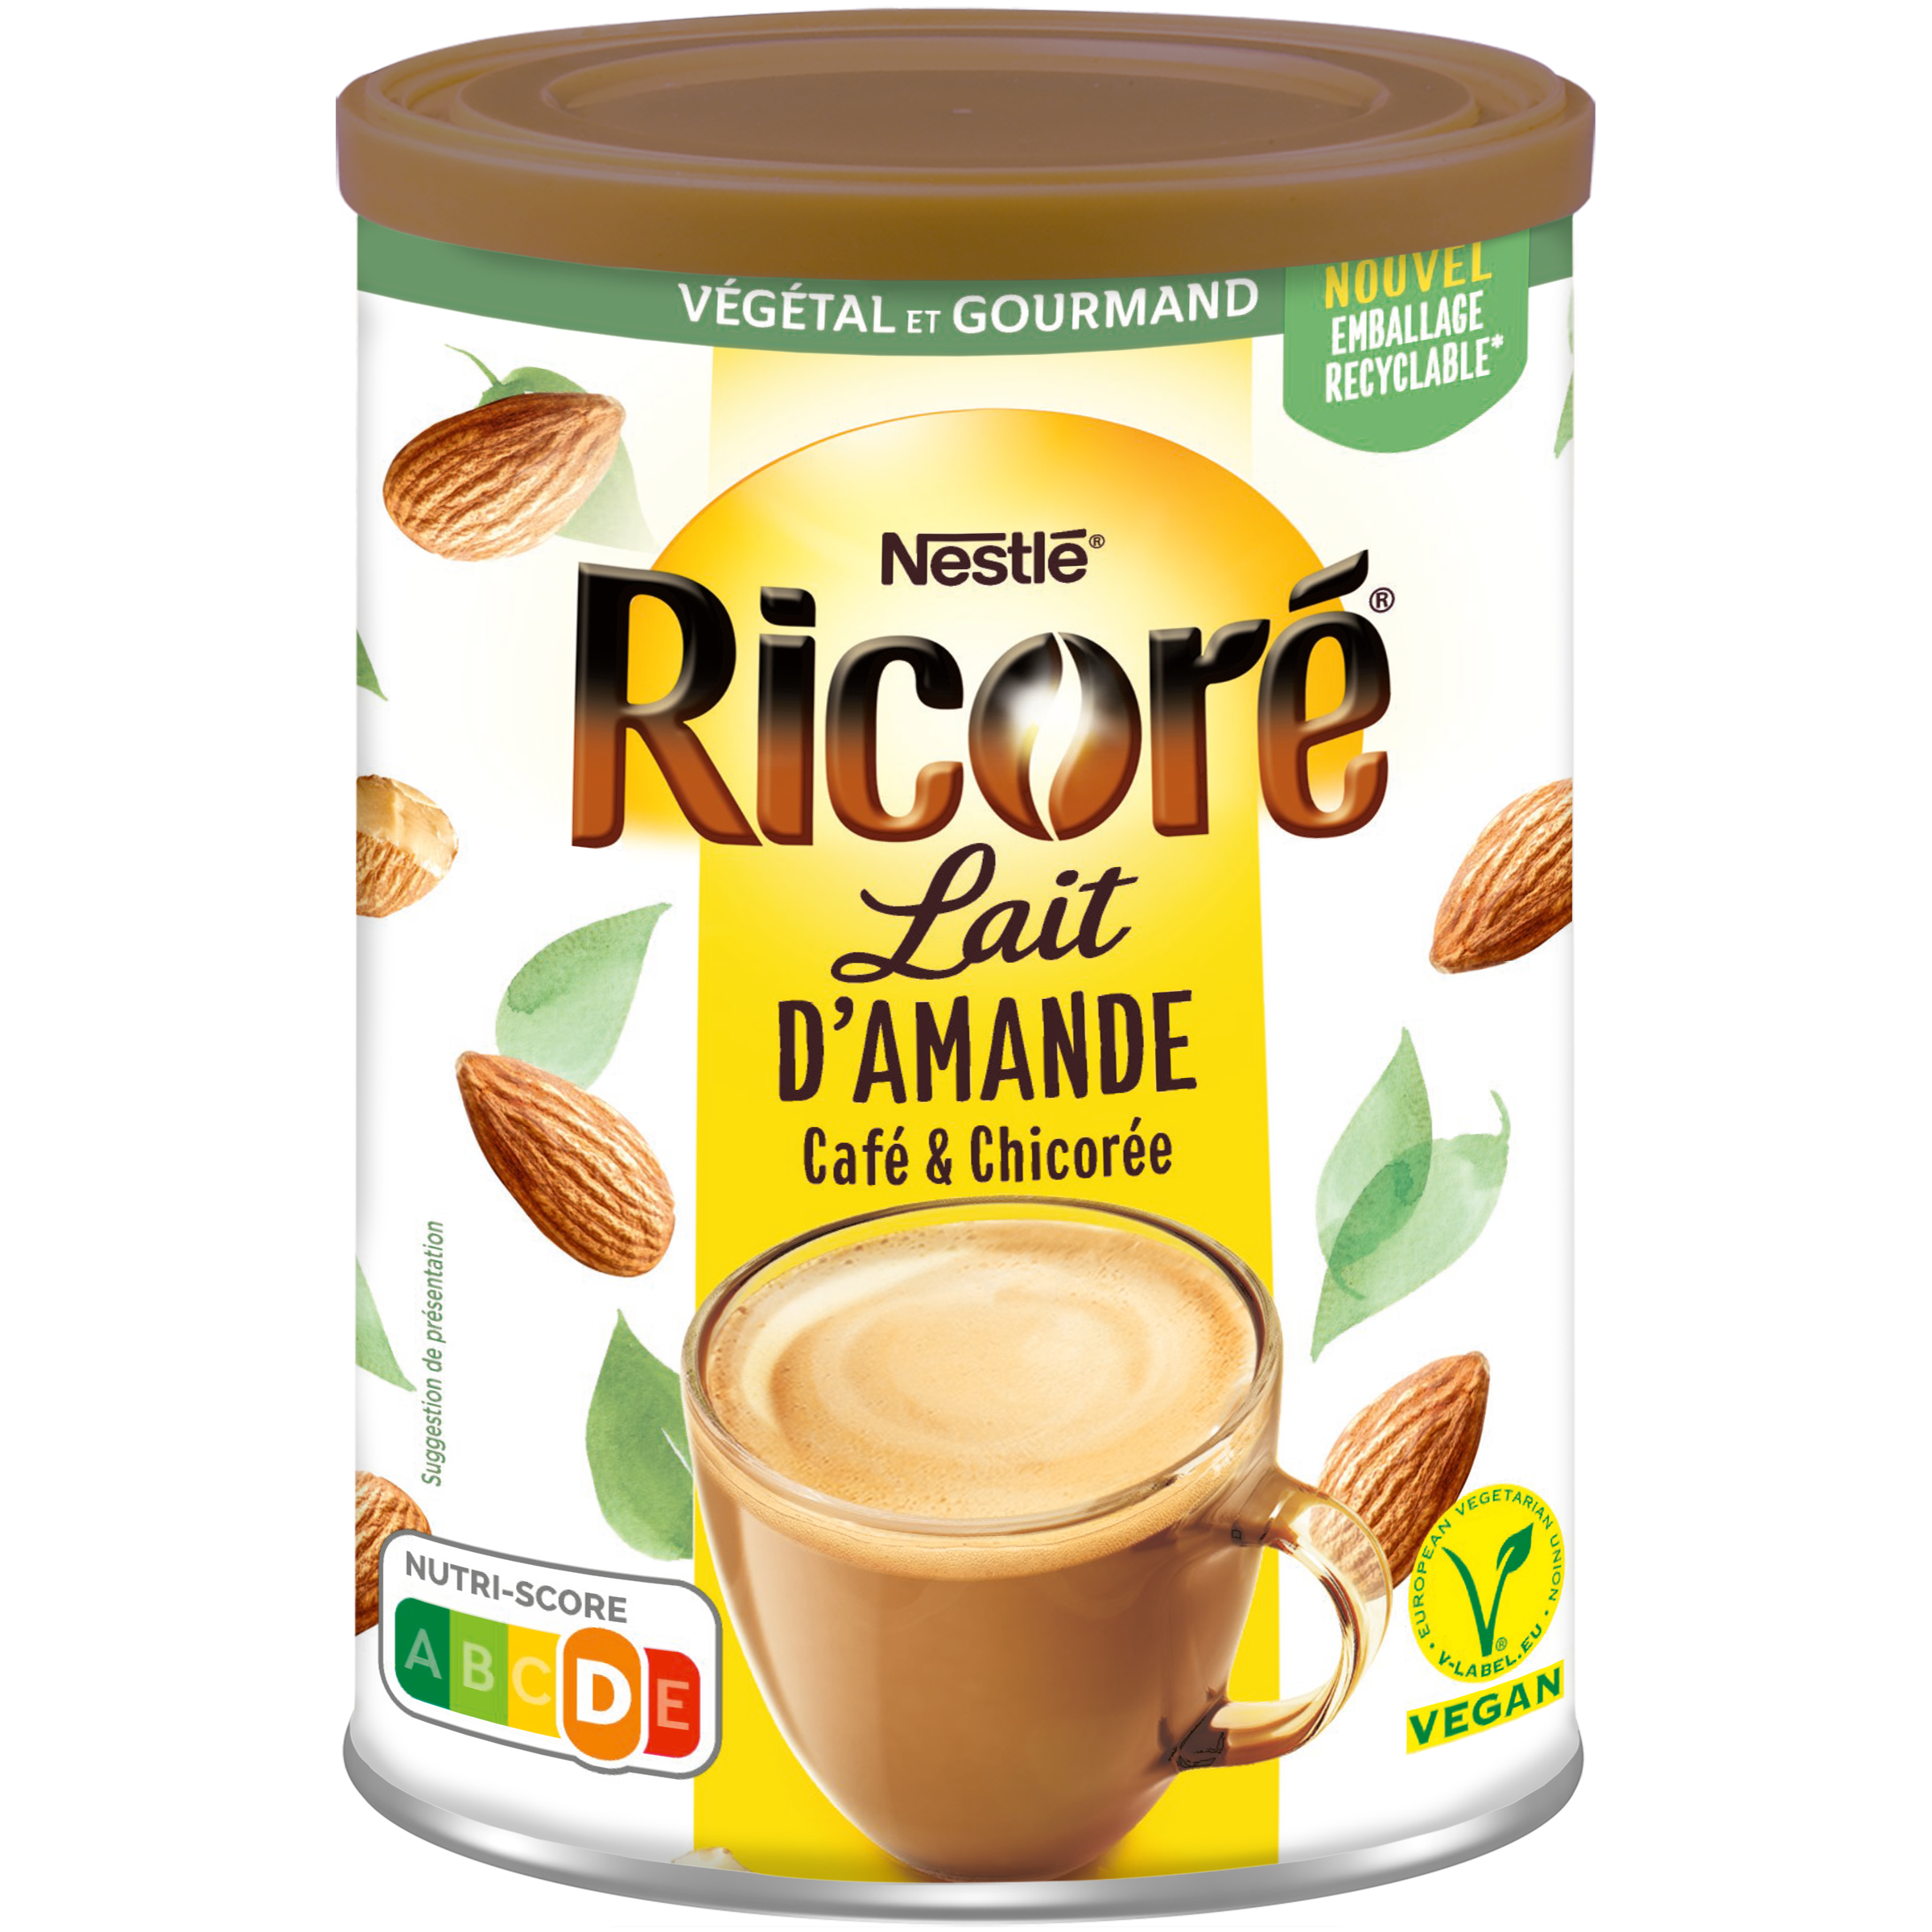 French Click - Ricore Cafe & Chicoree Solubles Lait d'Amande Boîte